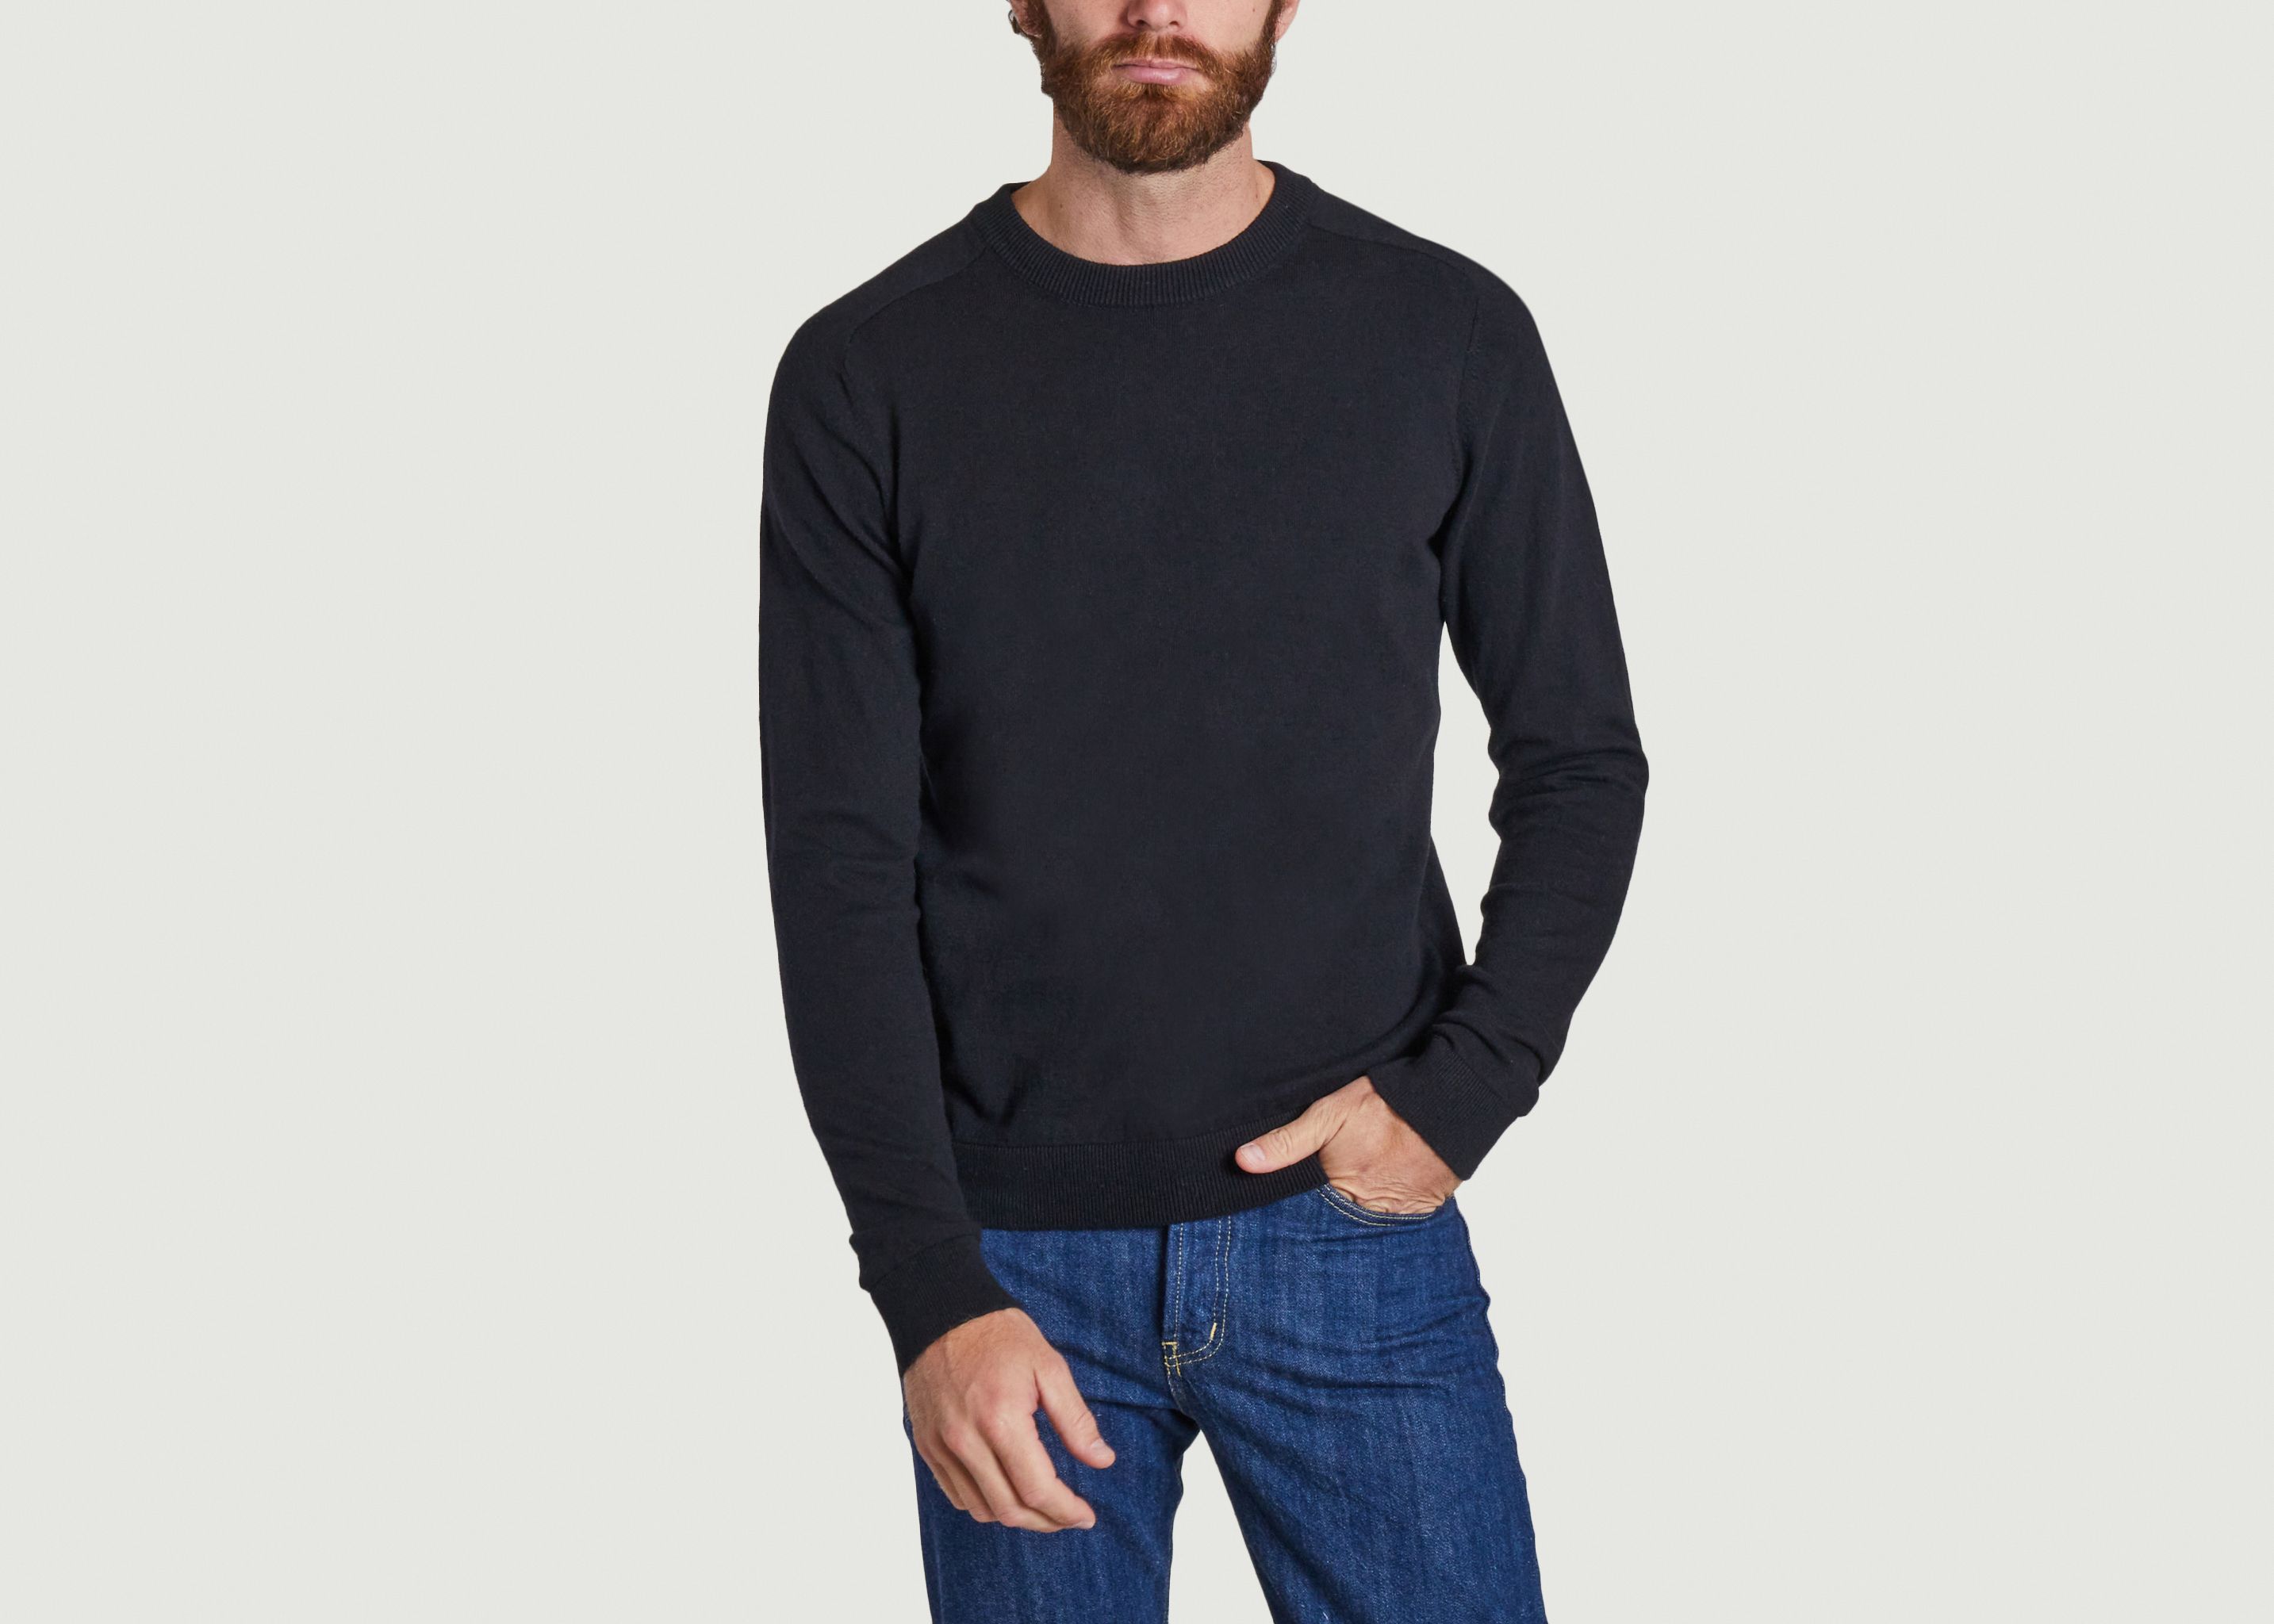 Organic cotton and hemp sweater - KCA